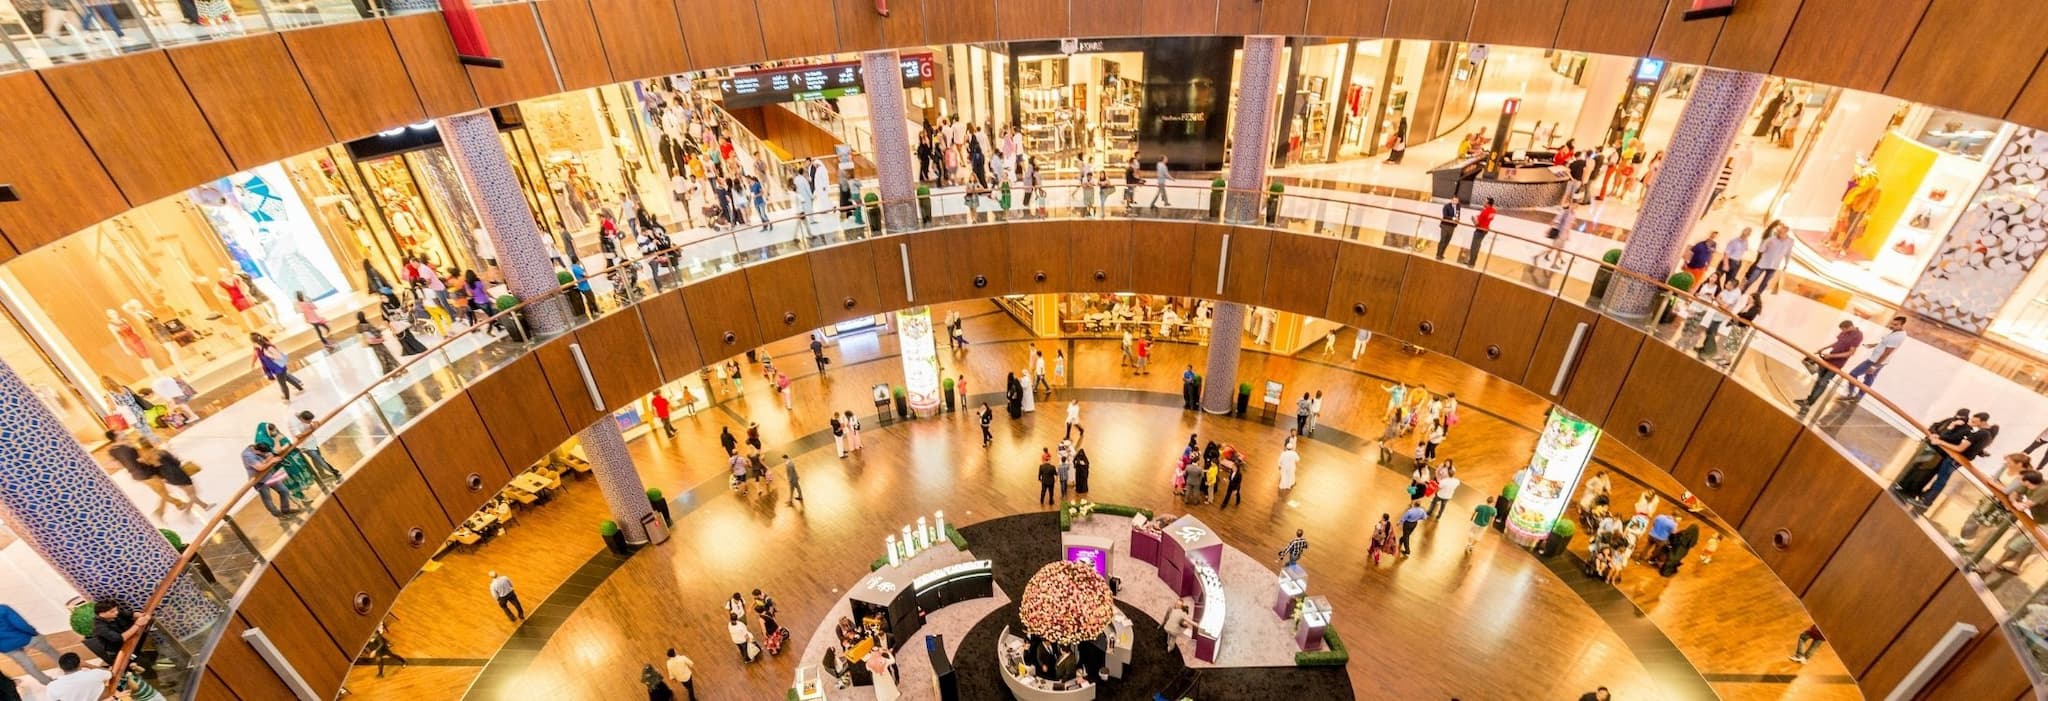 Musafir Recommends - Top 10 Malls of Dubai